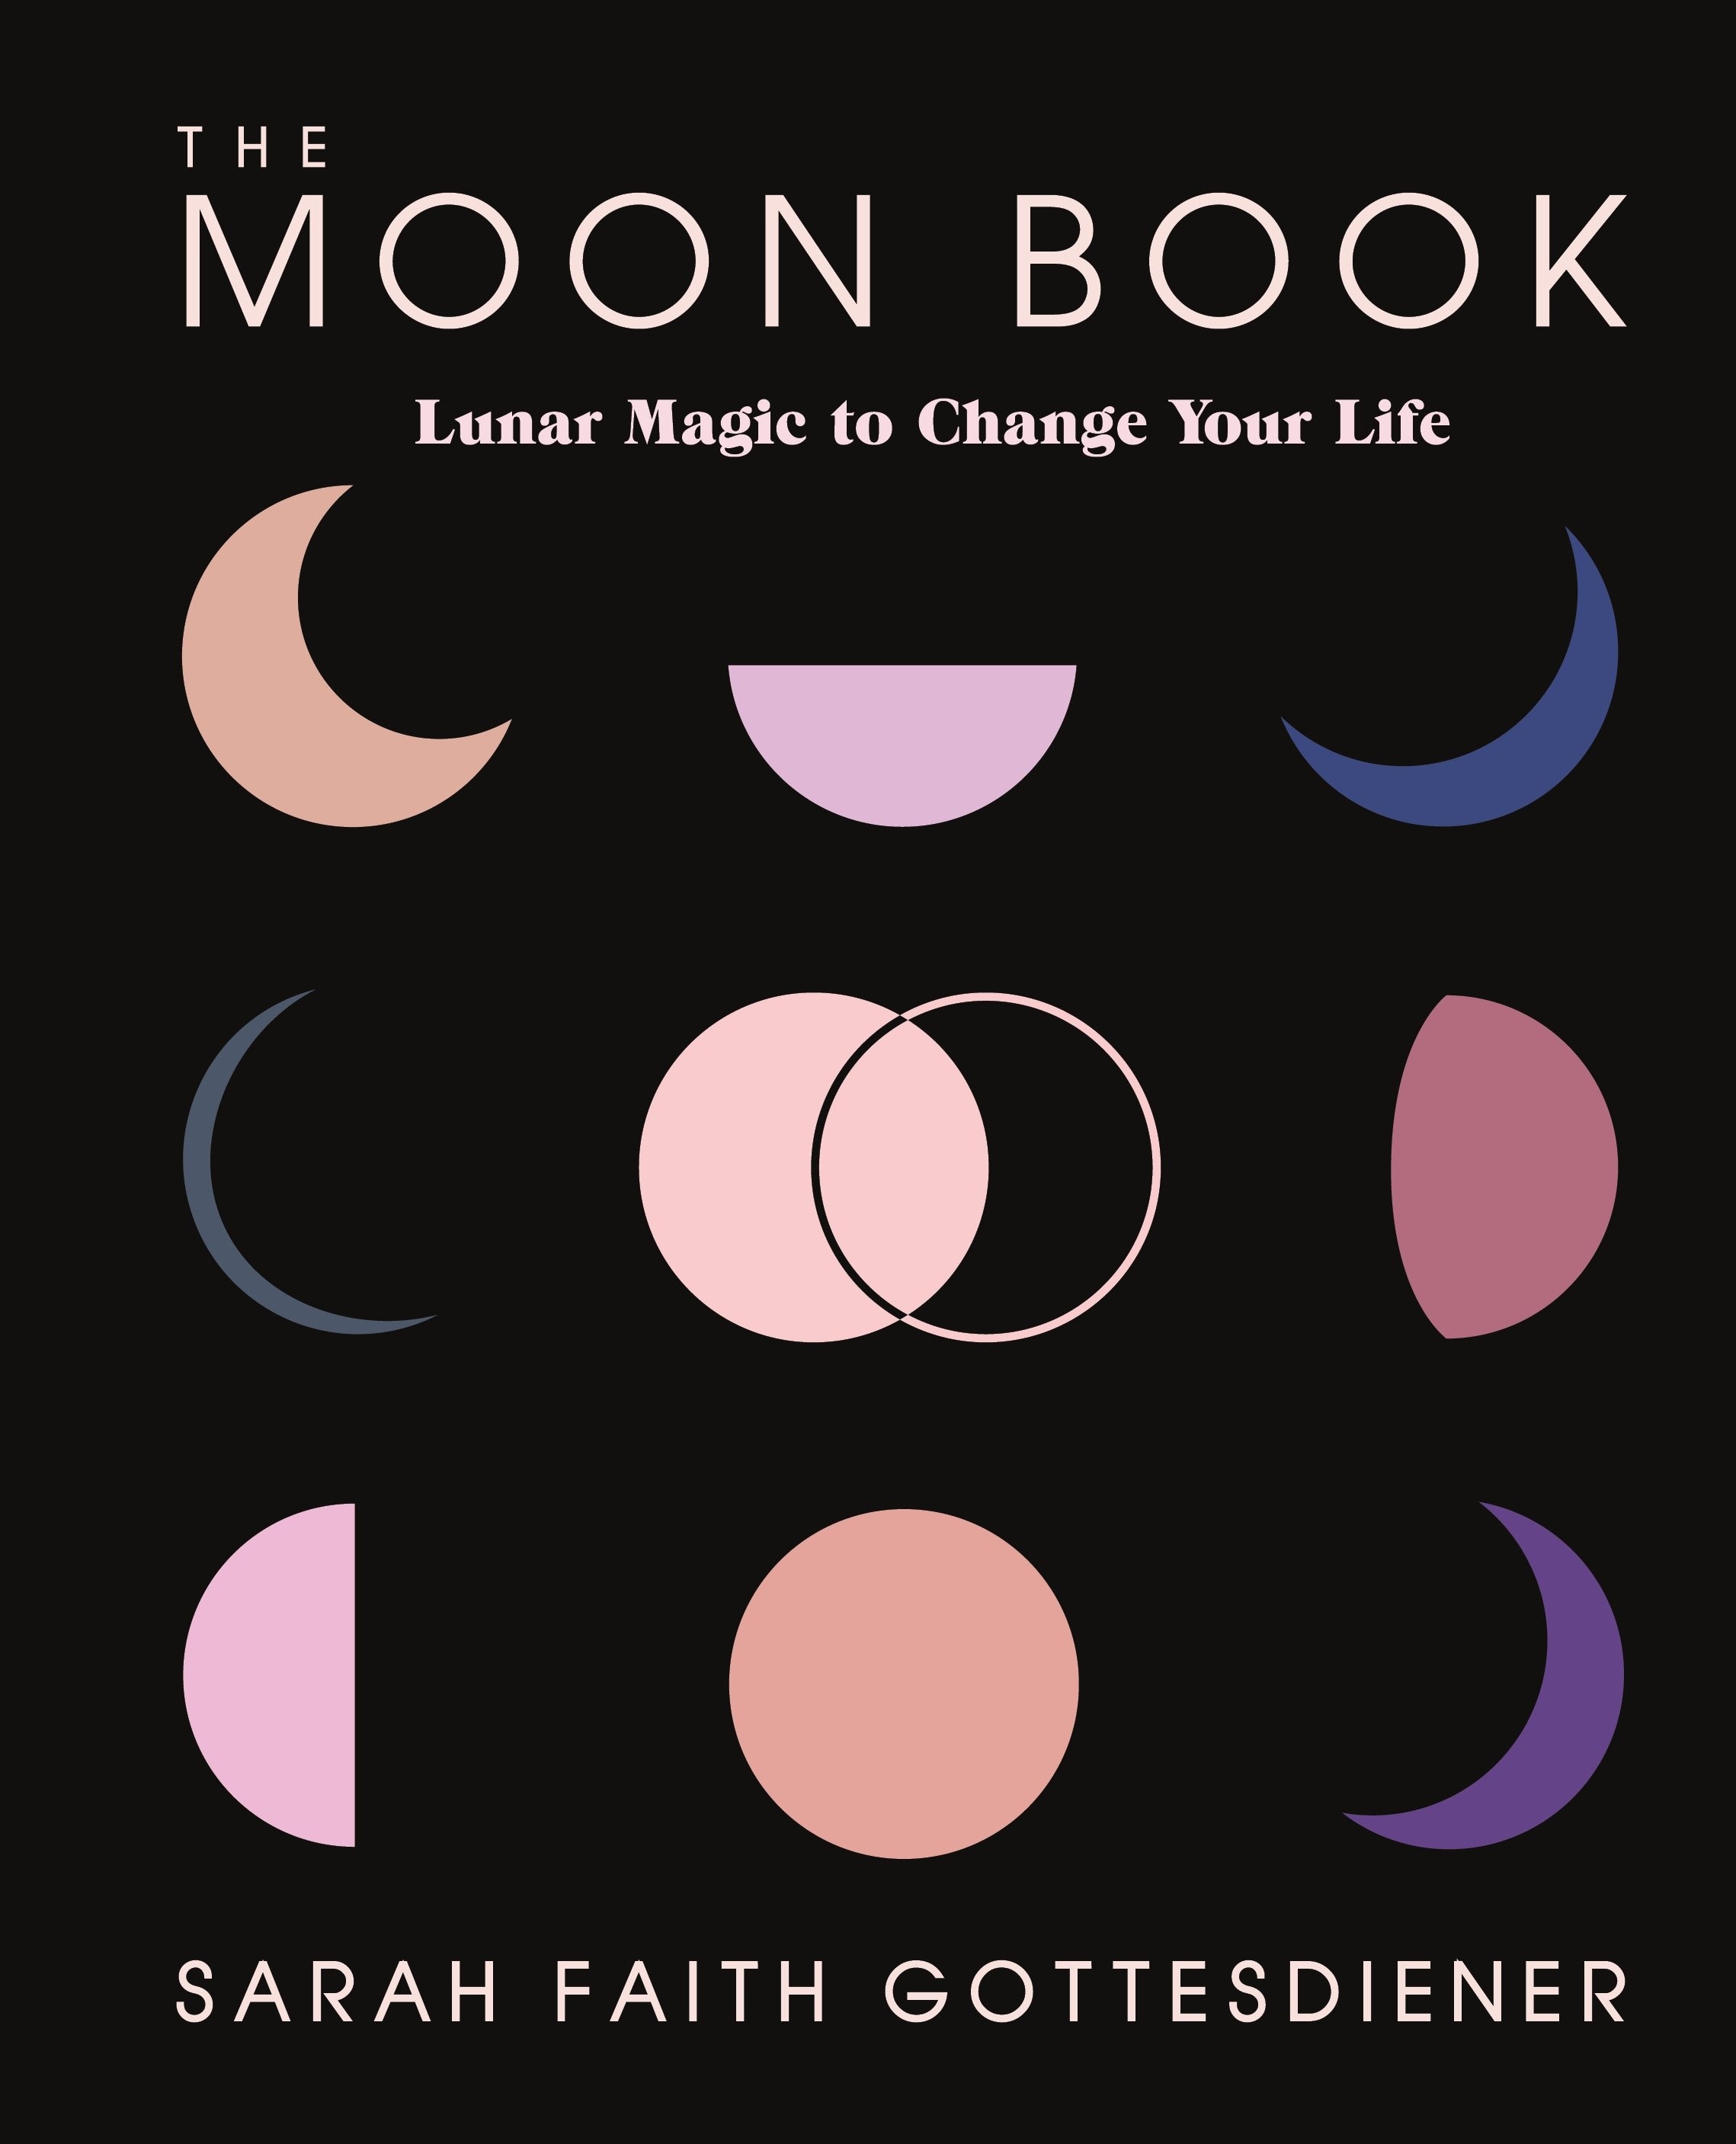 Book “The Moon Book” by Sarah Faith Gottesdiener — December 15, 2020